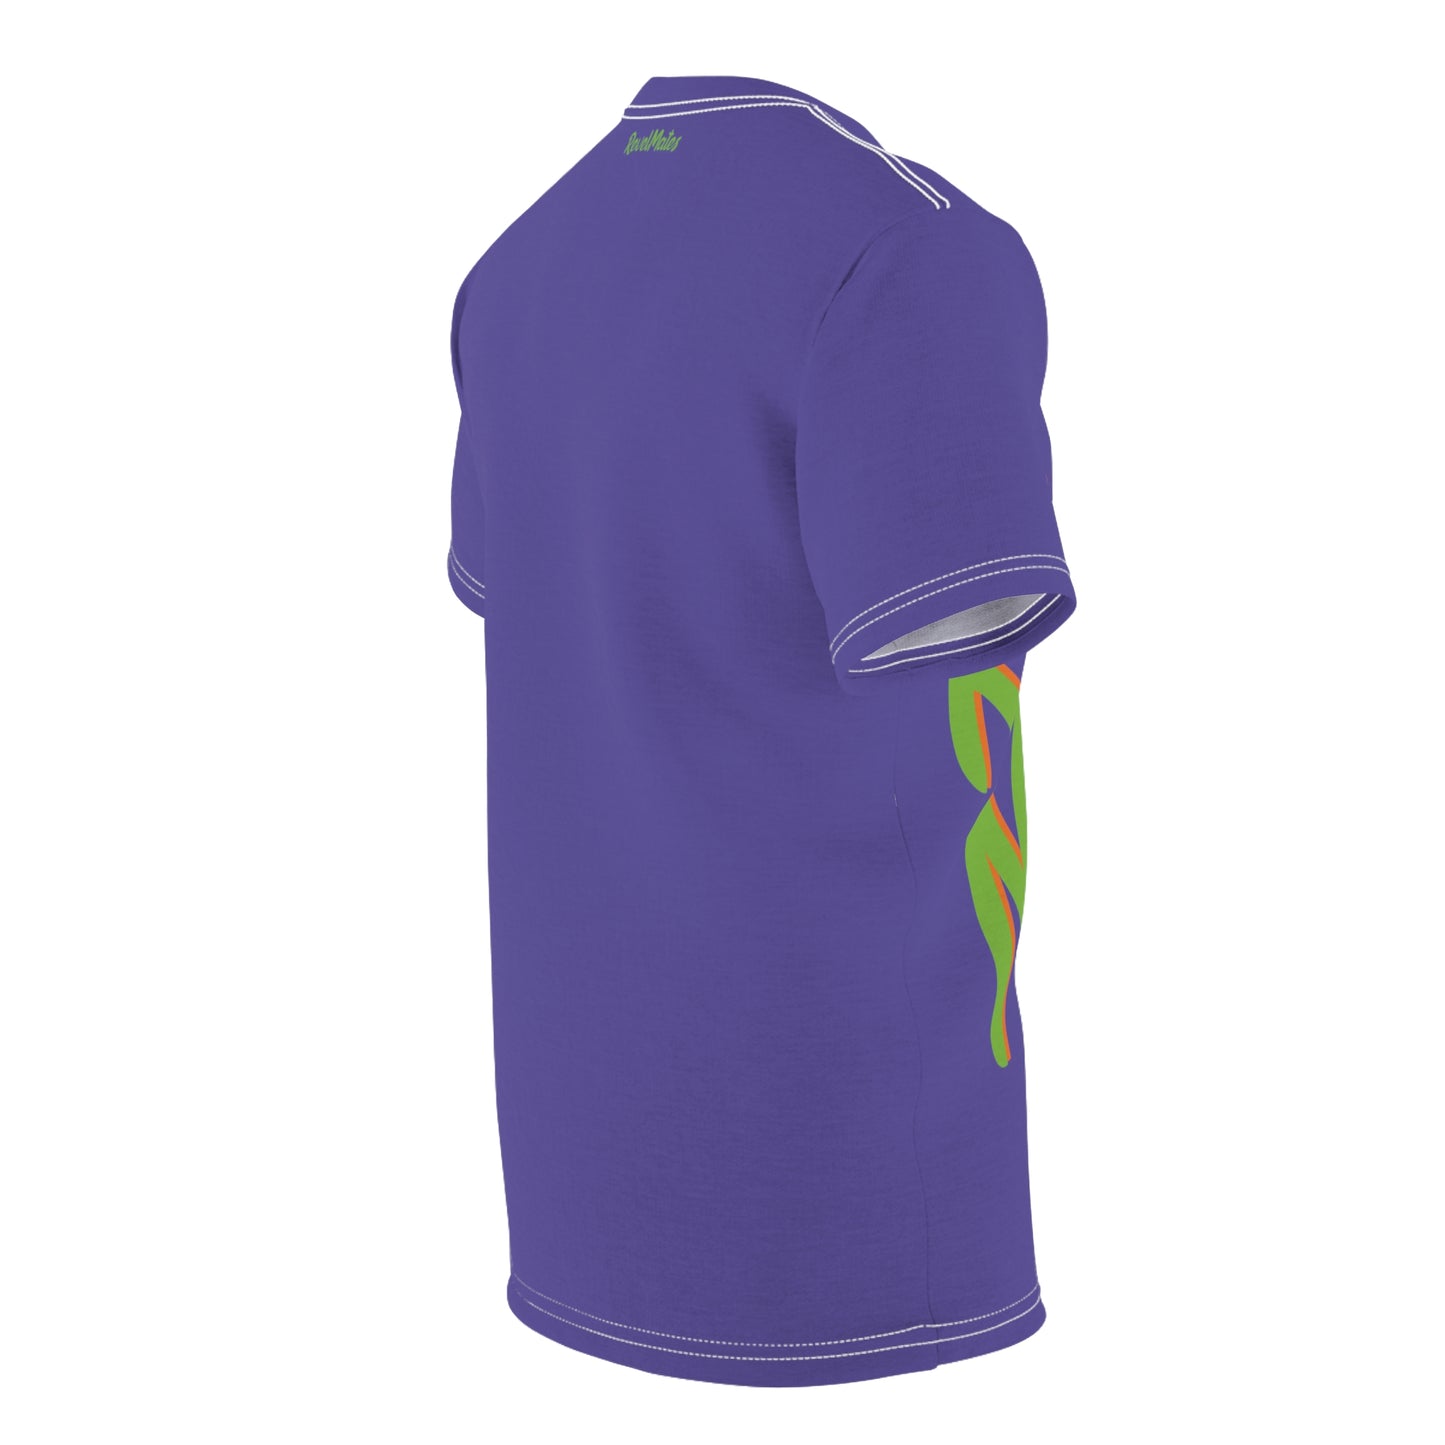 Unisex T-Shirt | All Over Print Tee | Lavender & Lime RevelMates Design